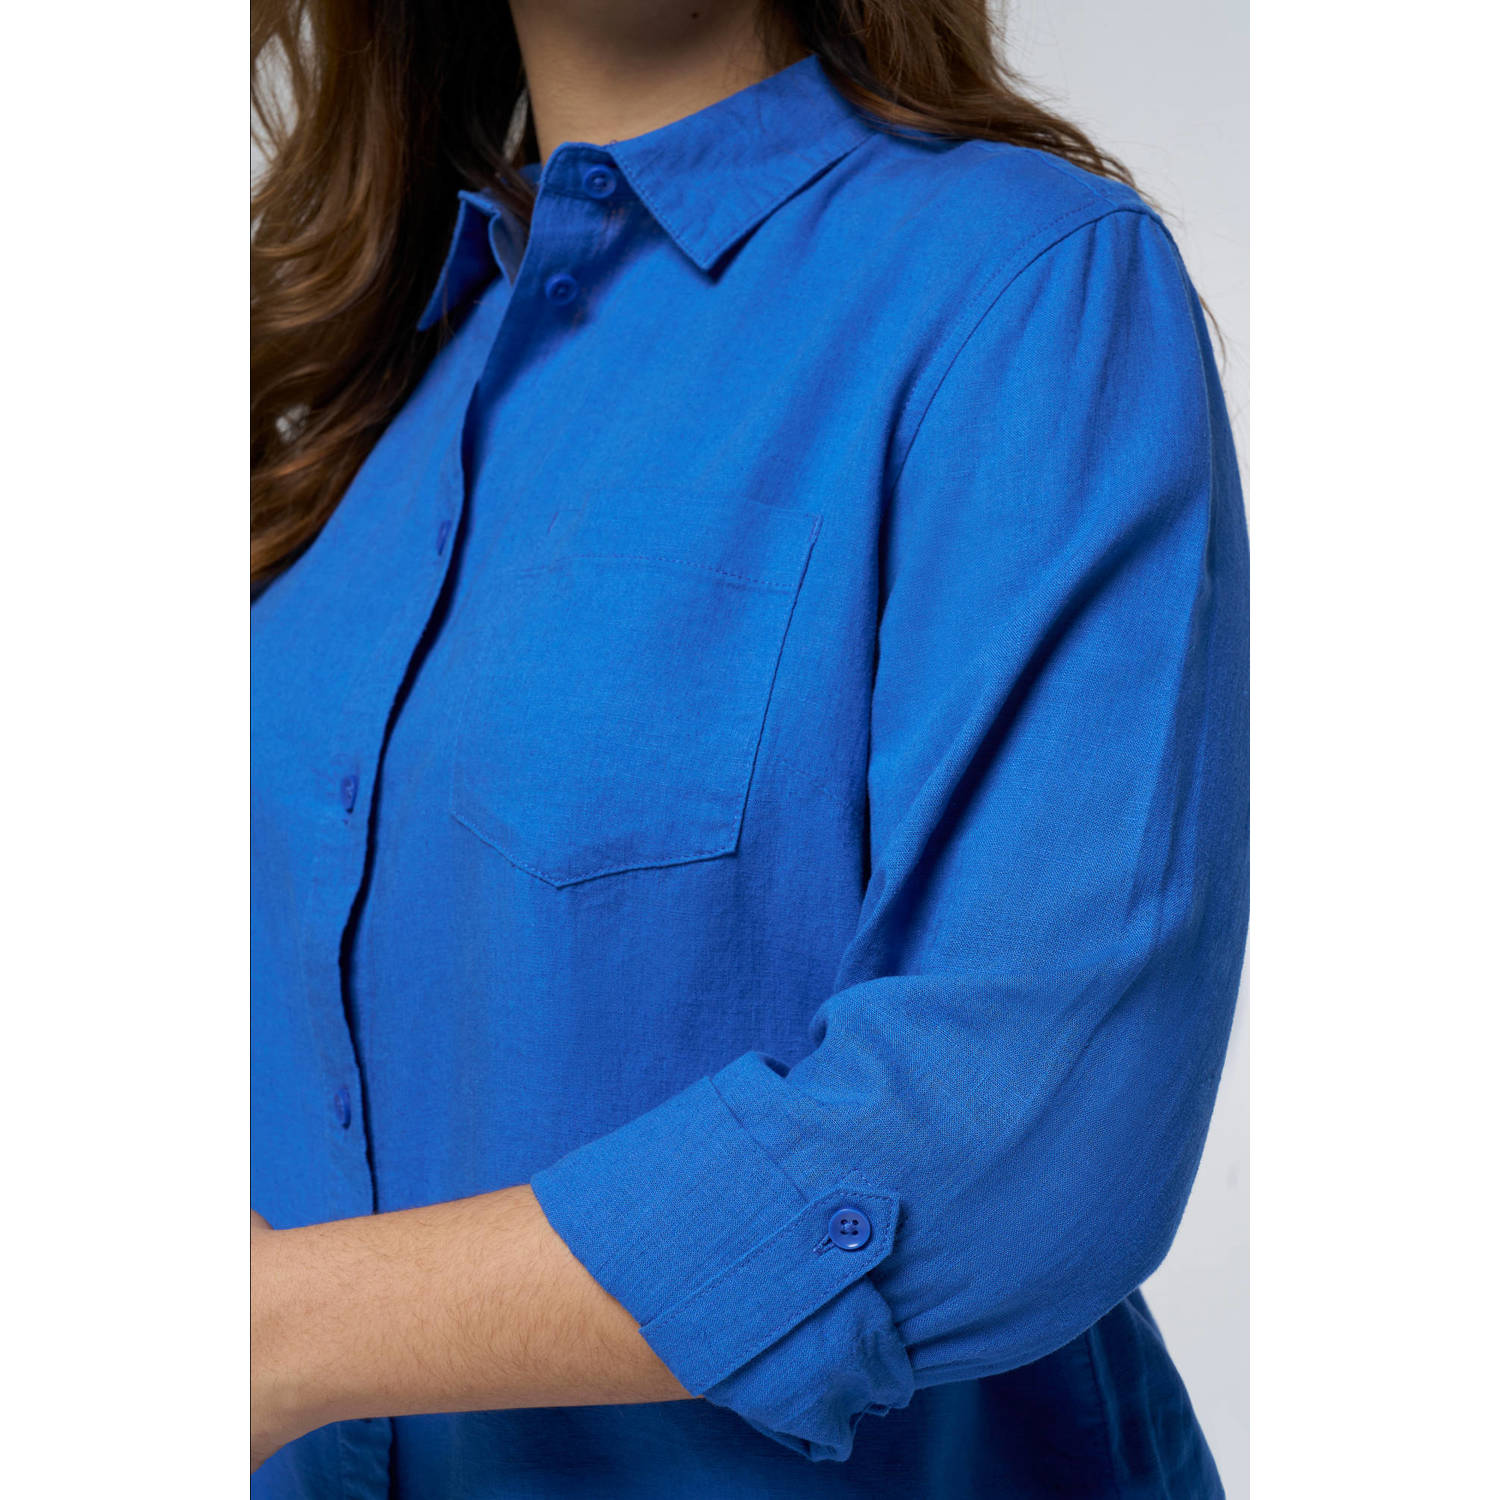 MS Mode blouse blauw